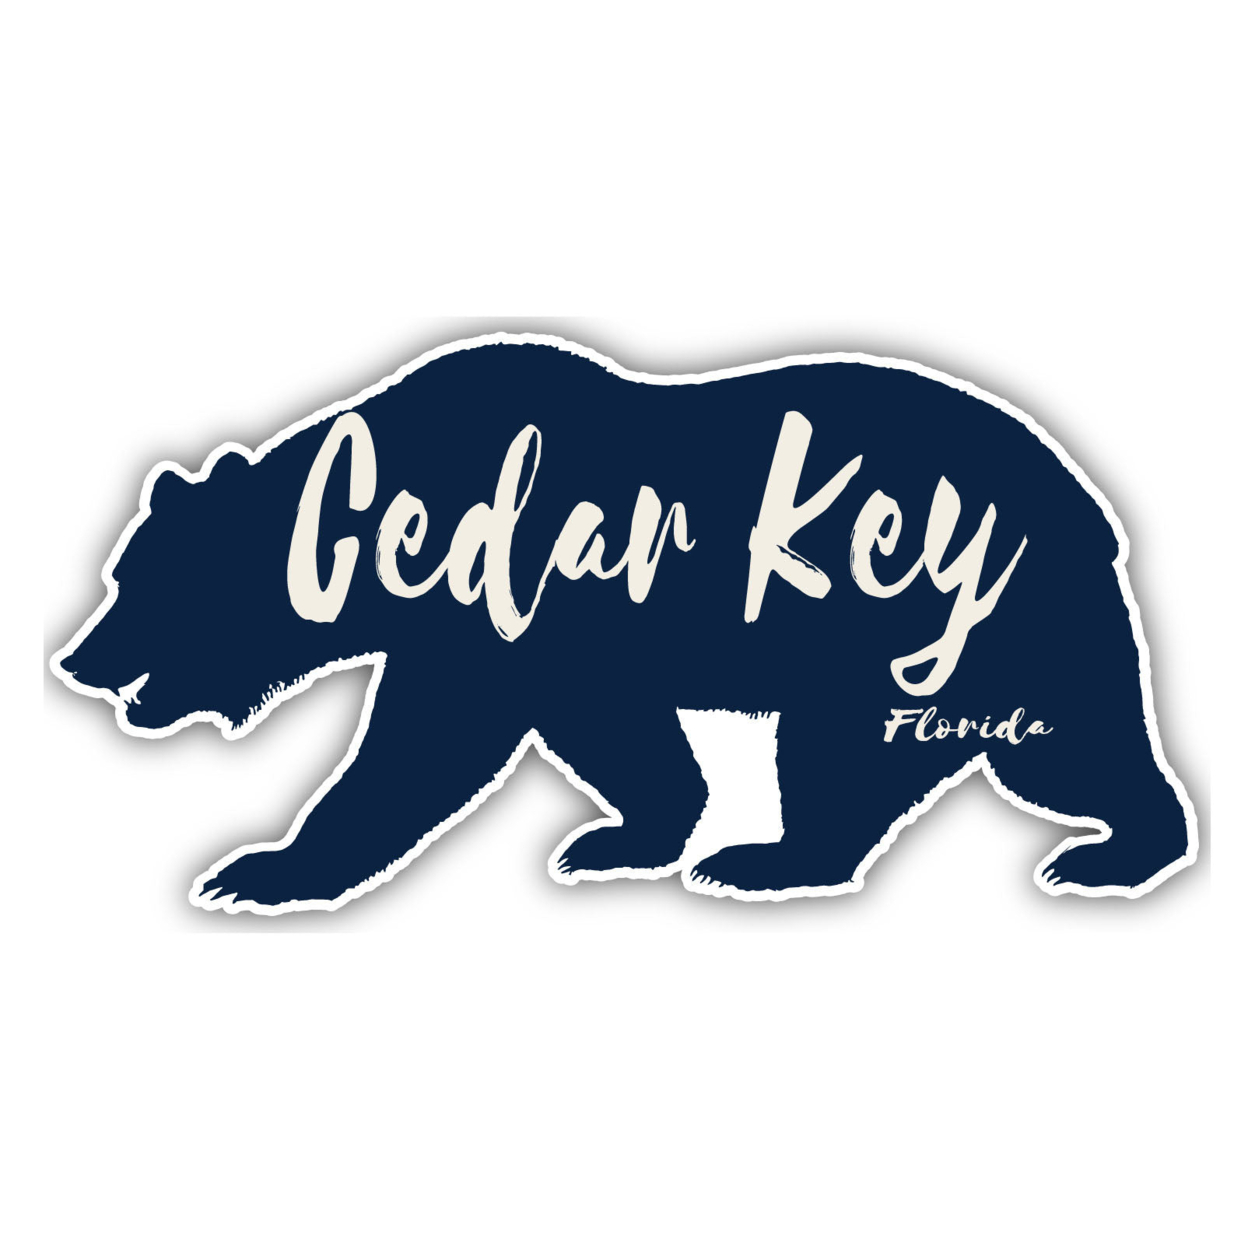 Cedar Key Florida Souvenir Decorative Stickers (Choose Theme And Size) - Single Unit, 6-Inch, Tent